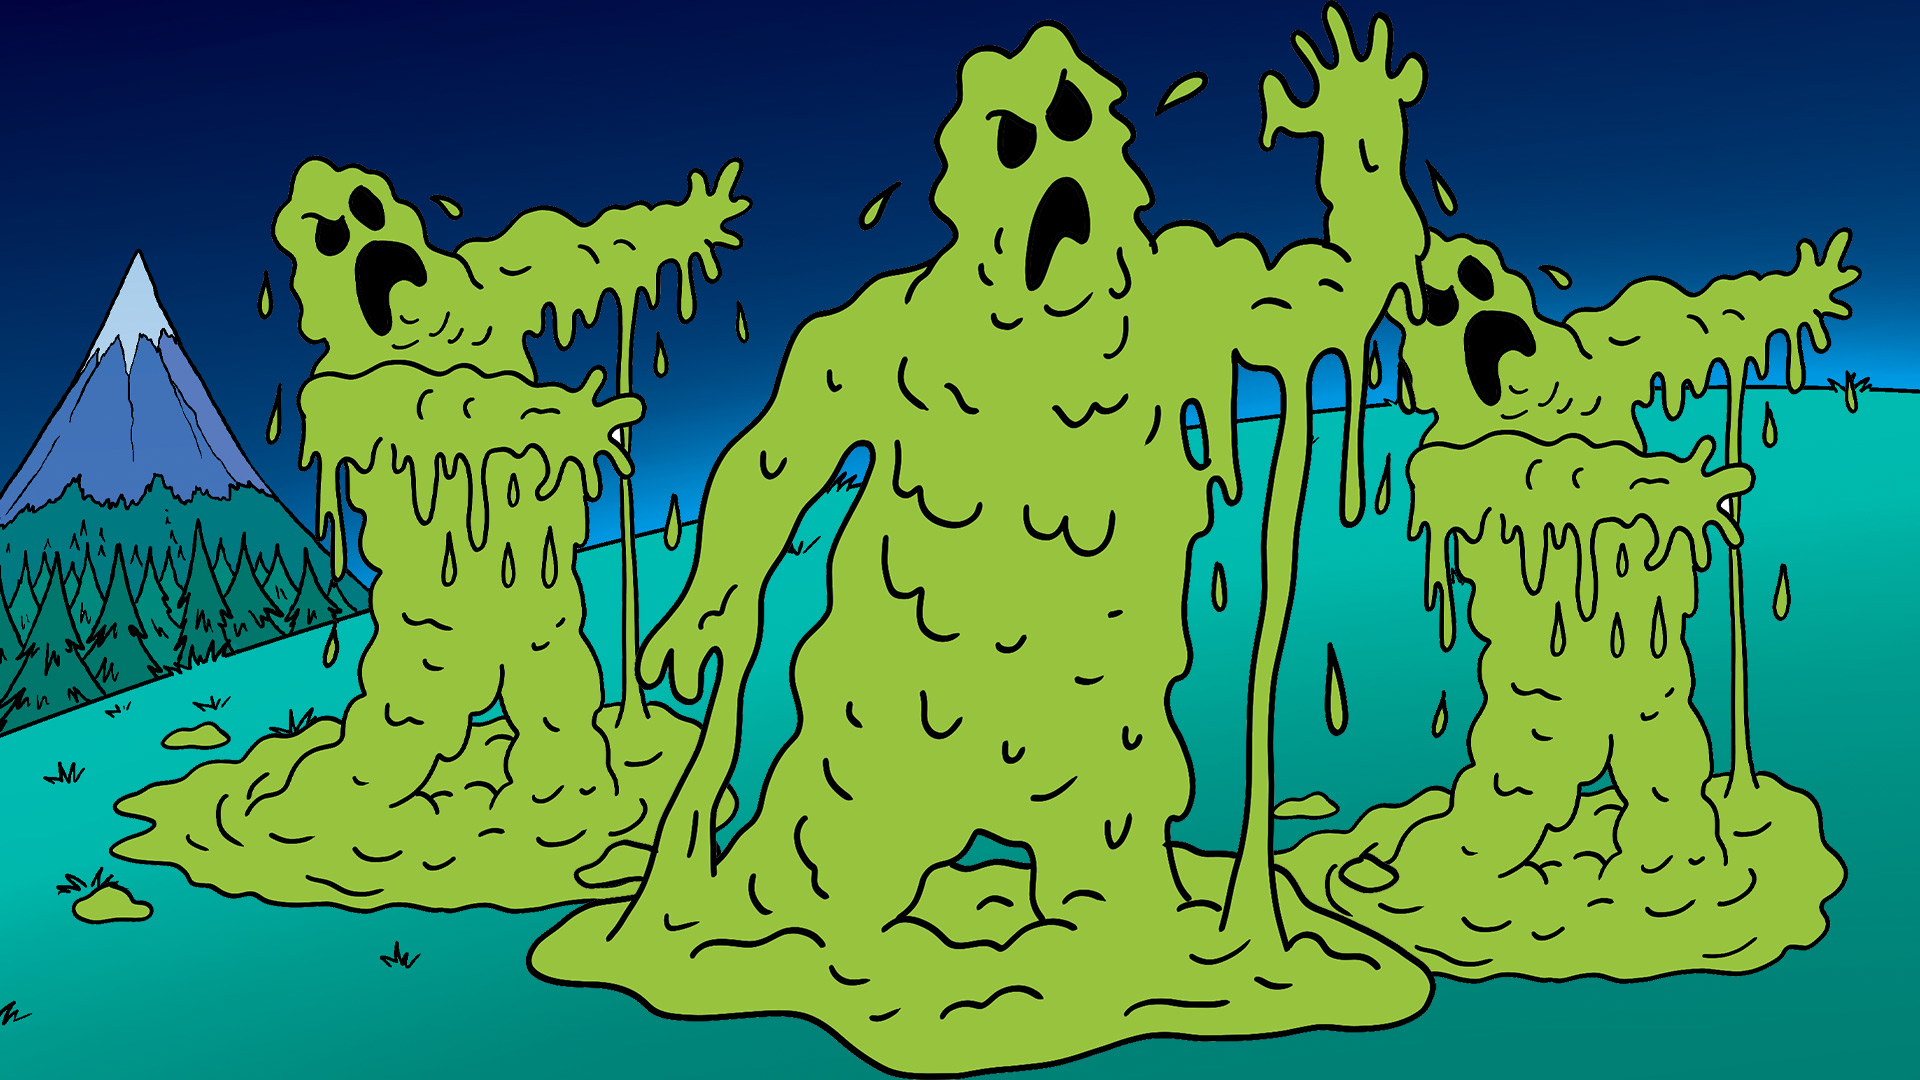 Slime zombies on Beanotown's fields